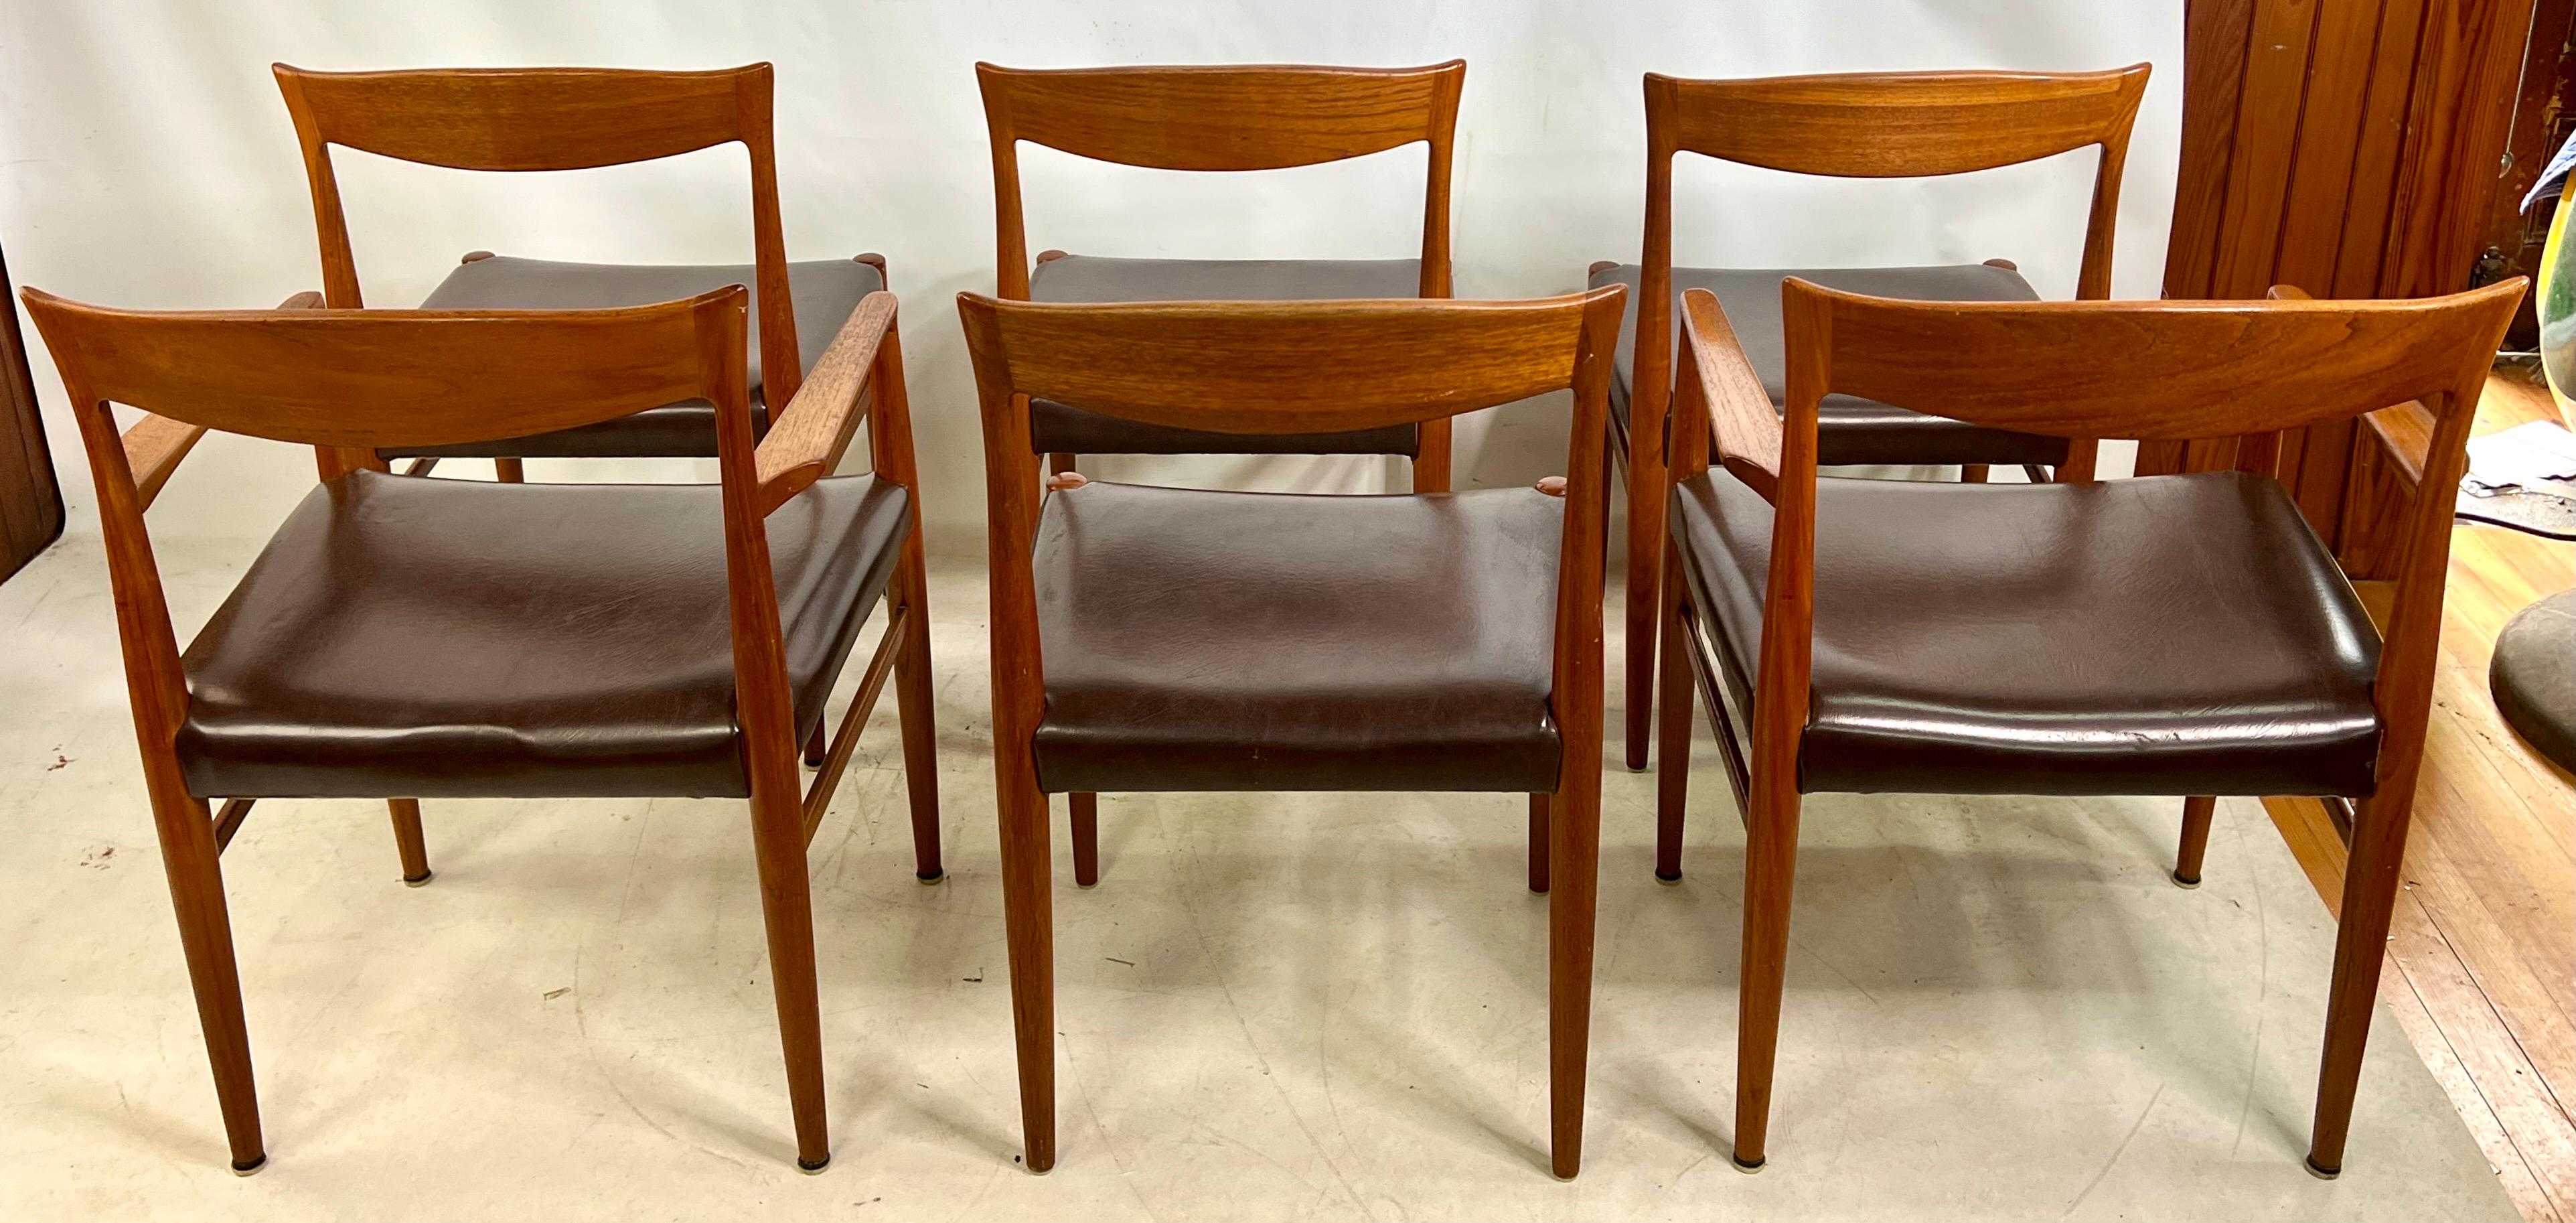 Vintage Danish Teak Sculptural Dining Chairs - a Set of 6 For Sale 3